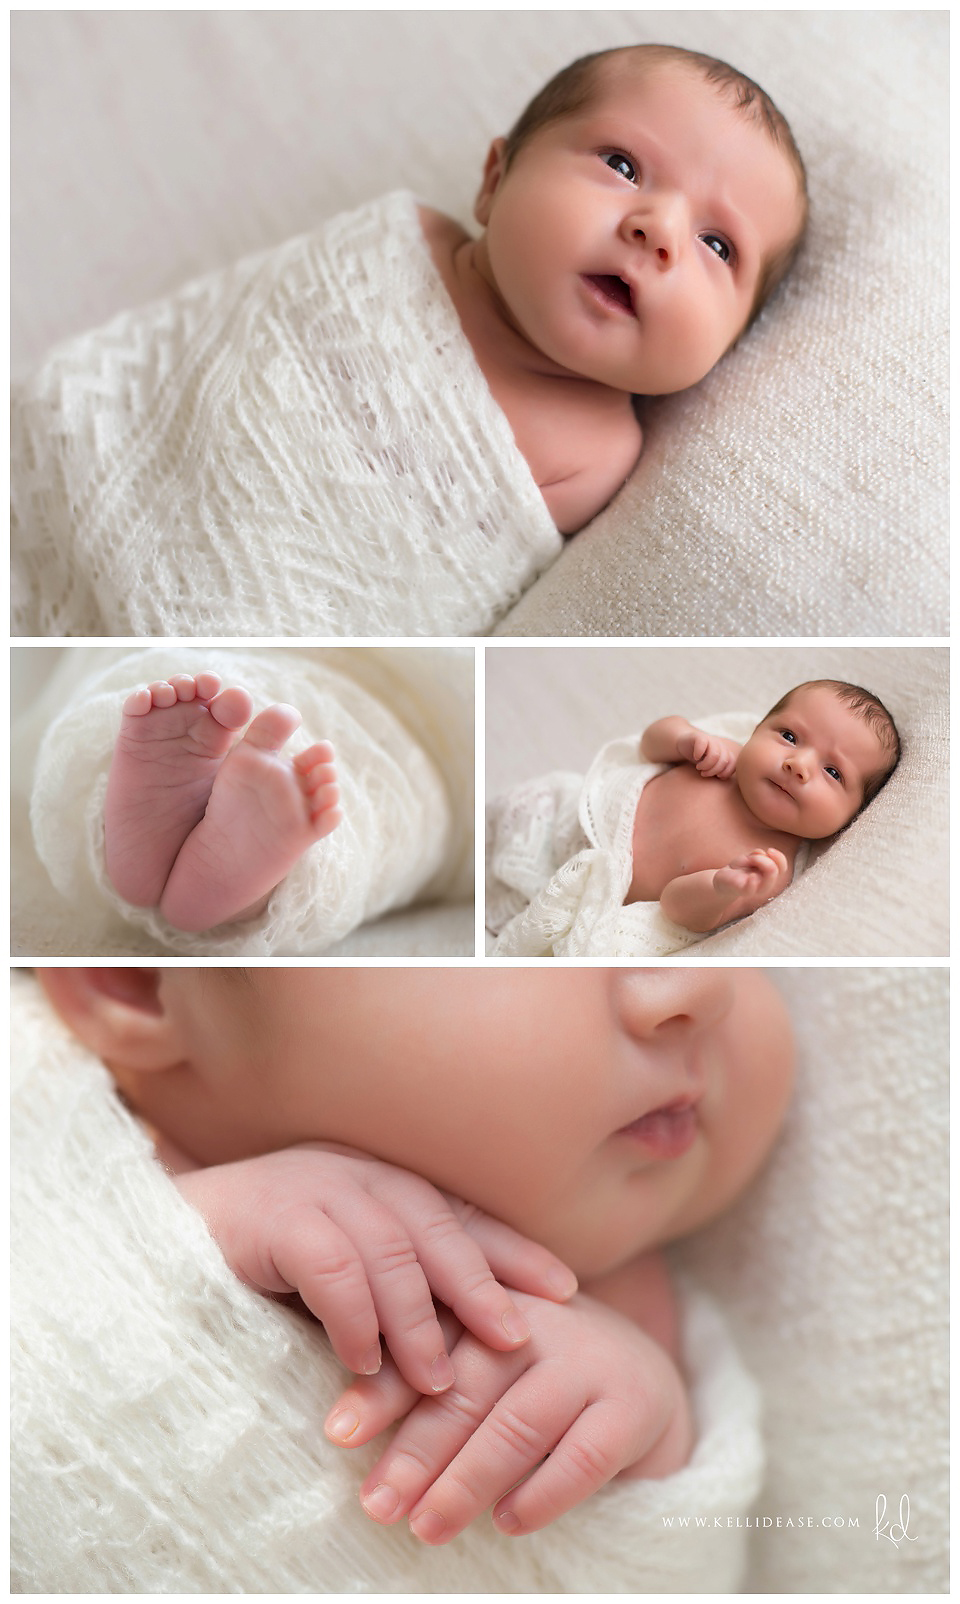 Simple and natural newborn photos in soft neutral tones | Avon CT portrait studio | Top CT newborn photographer Kelli Dease | www.kellidease.com